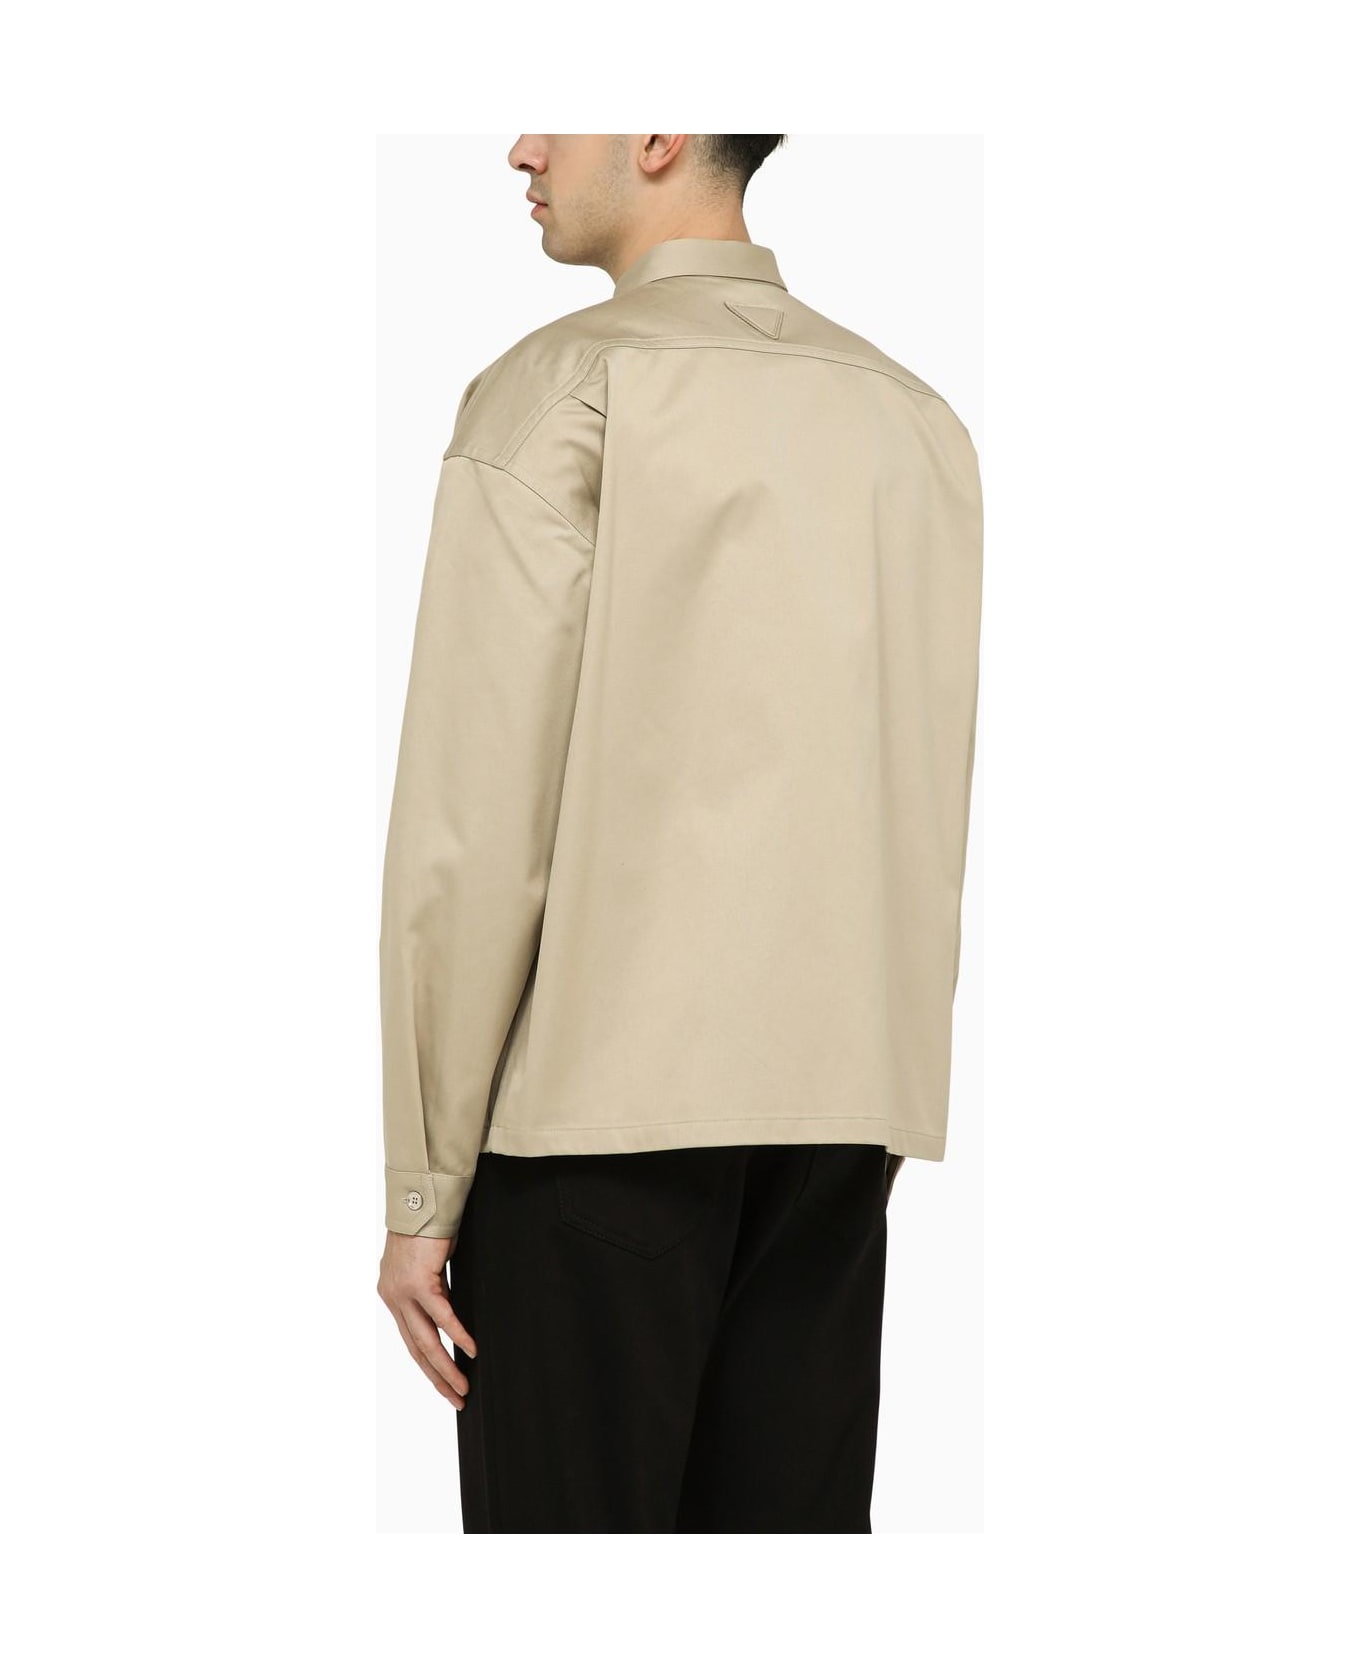 Prada Rope-coloured Shirt With Pockets - Corda シャツ